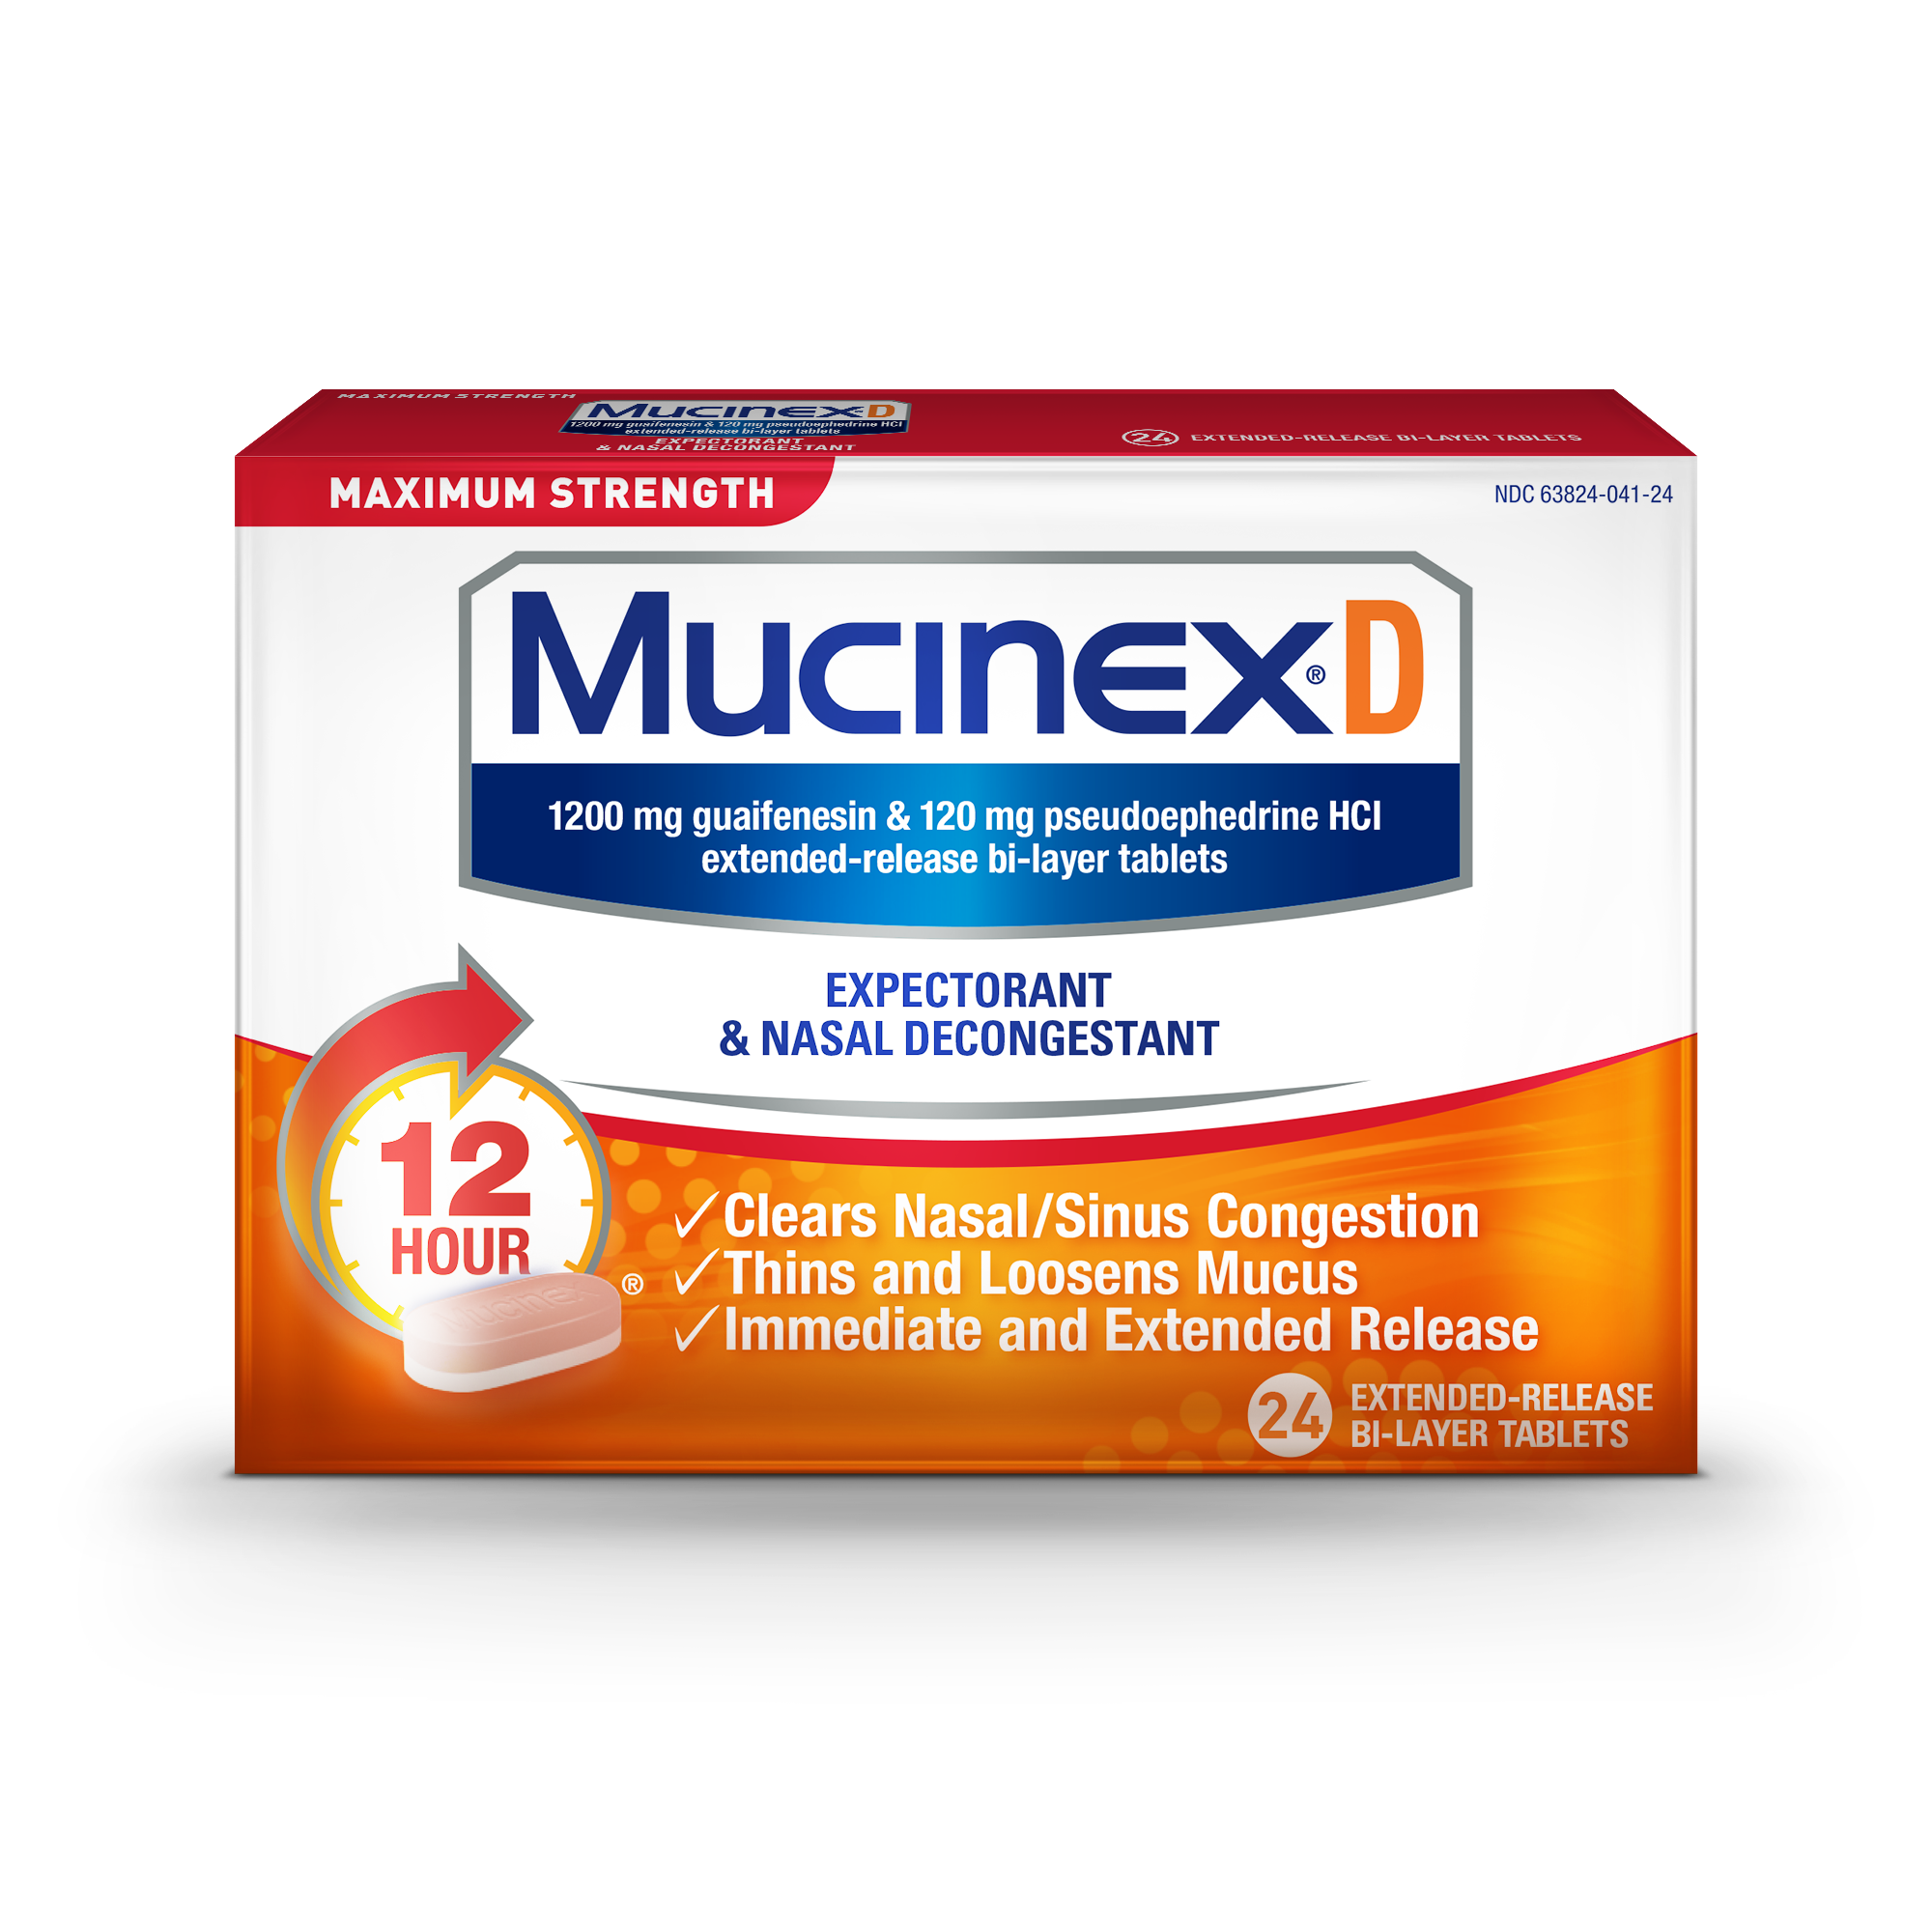 Mucinex D Maximum Strength Expectorant And Nasal Decongestant Tablets 